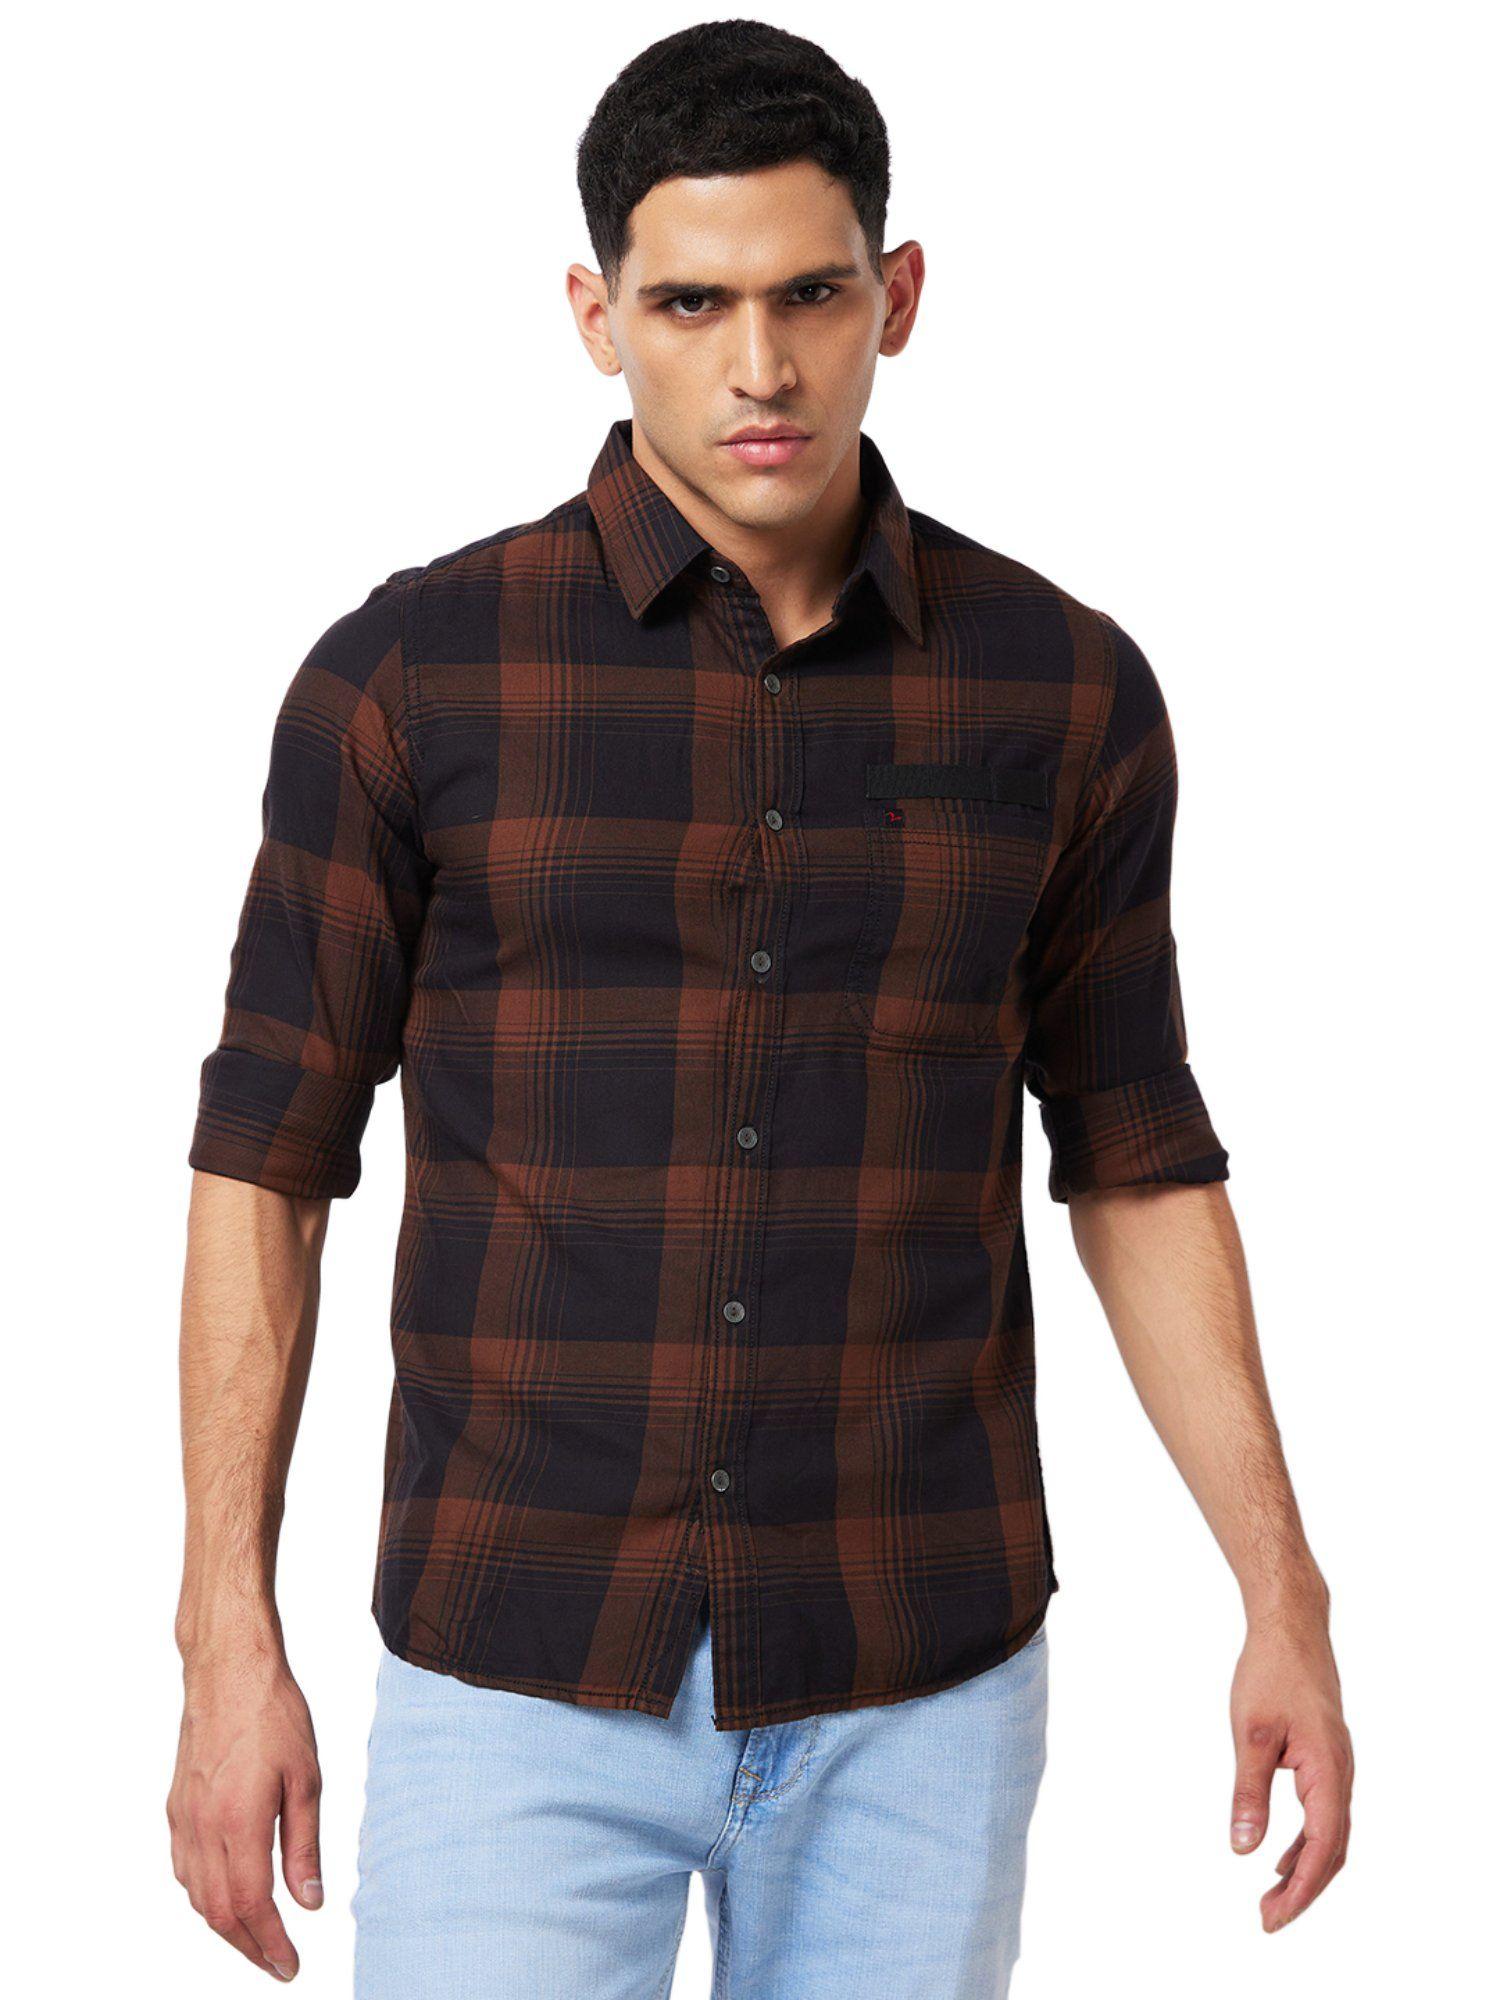 khaki-checked-shirt-for-men